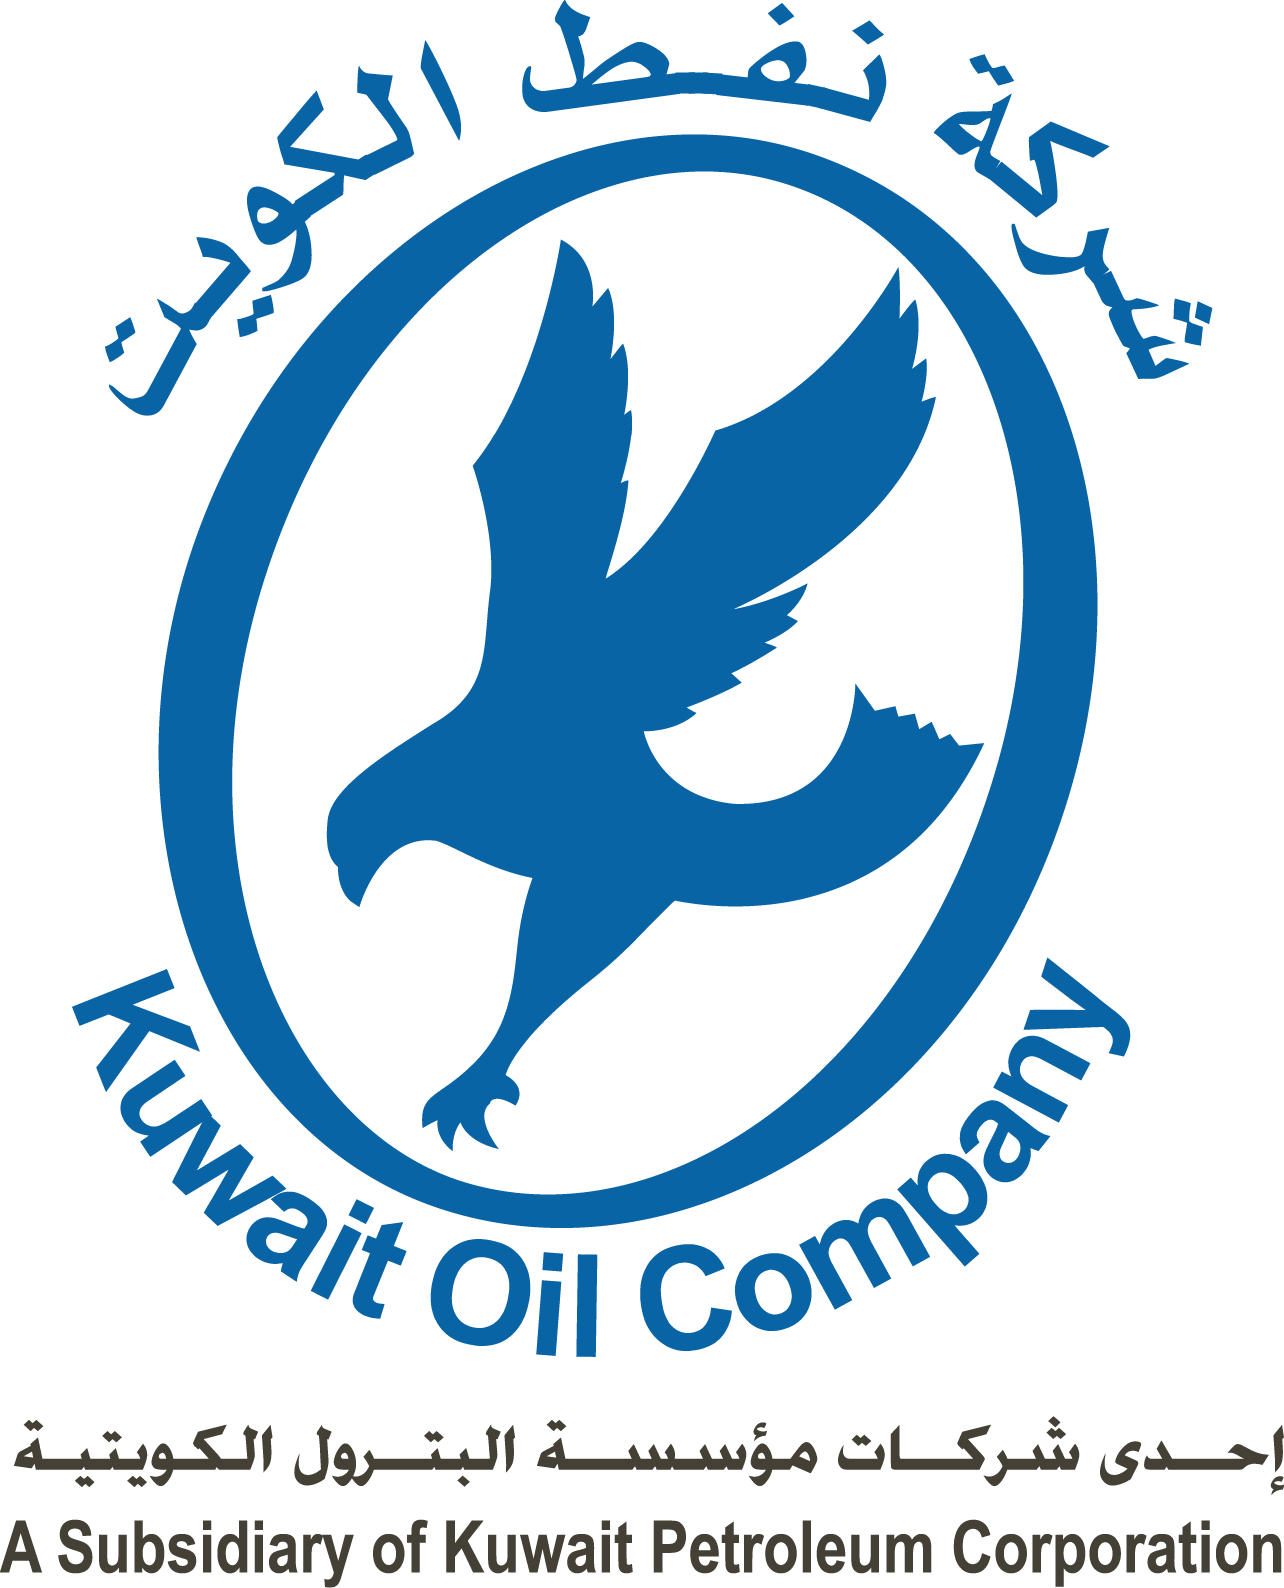 KOC Logo for wikipedia